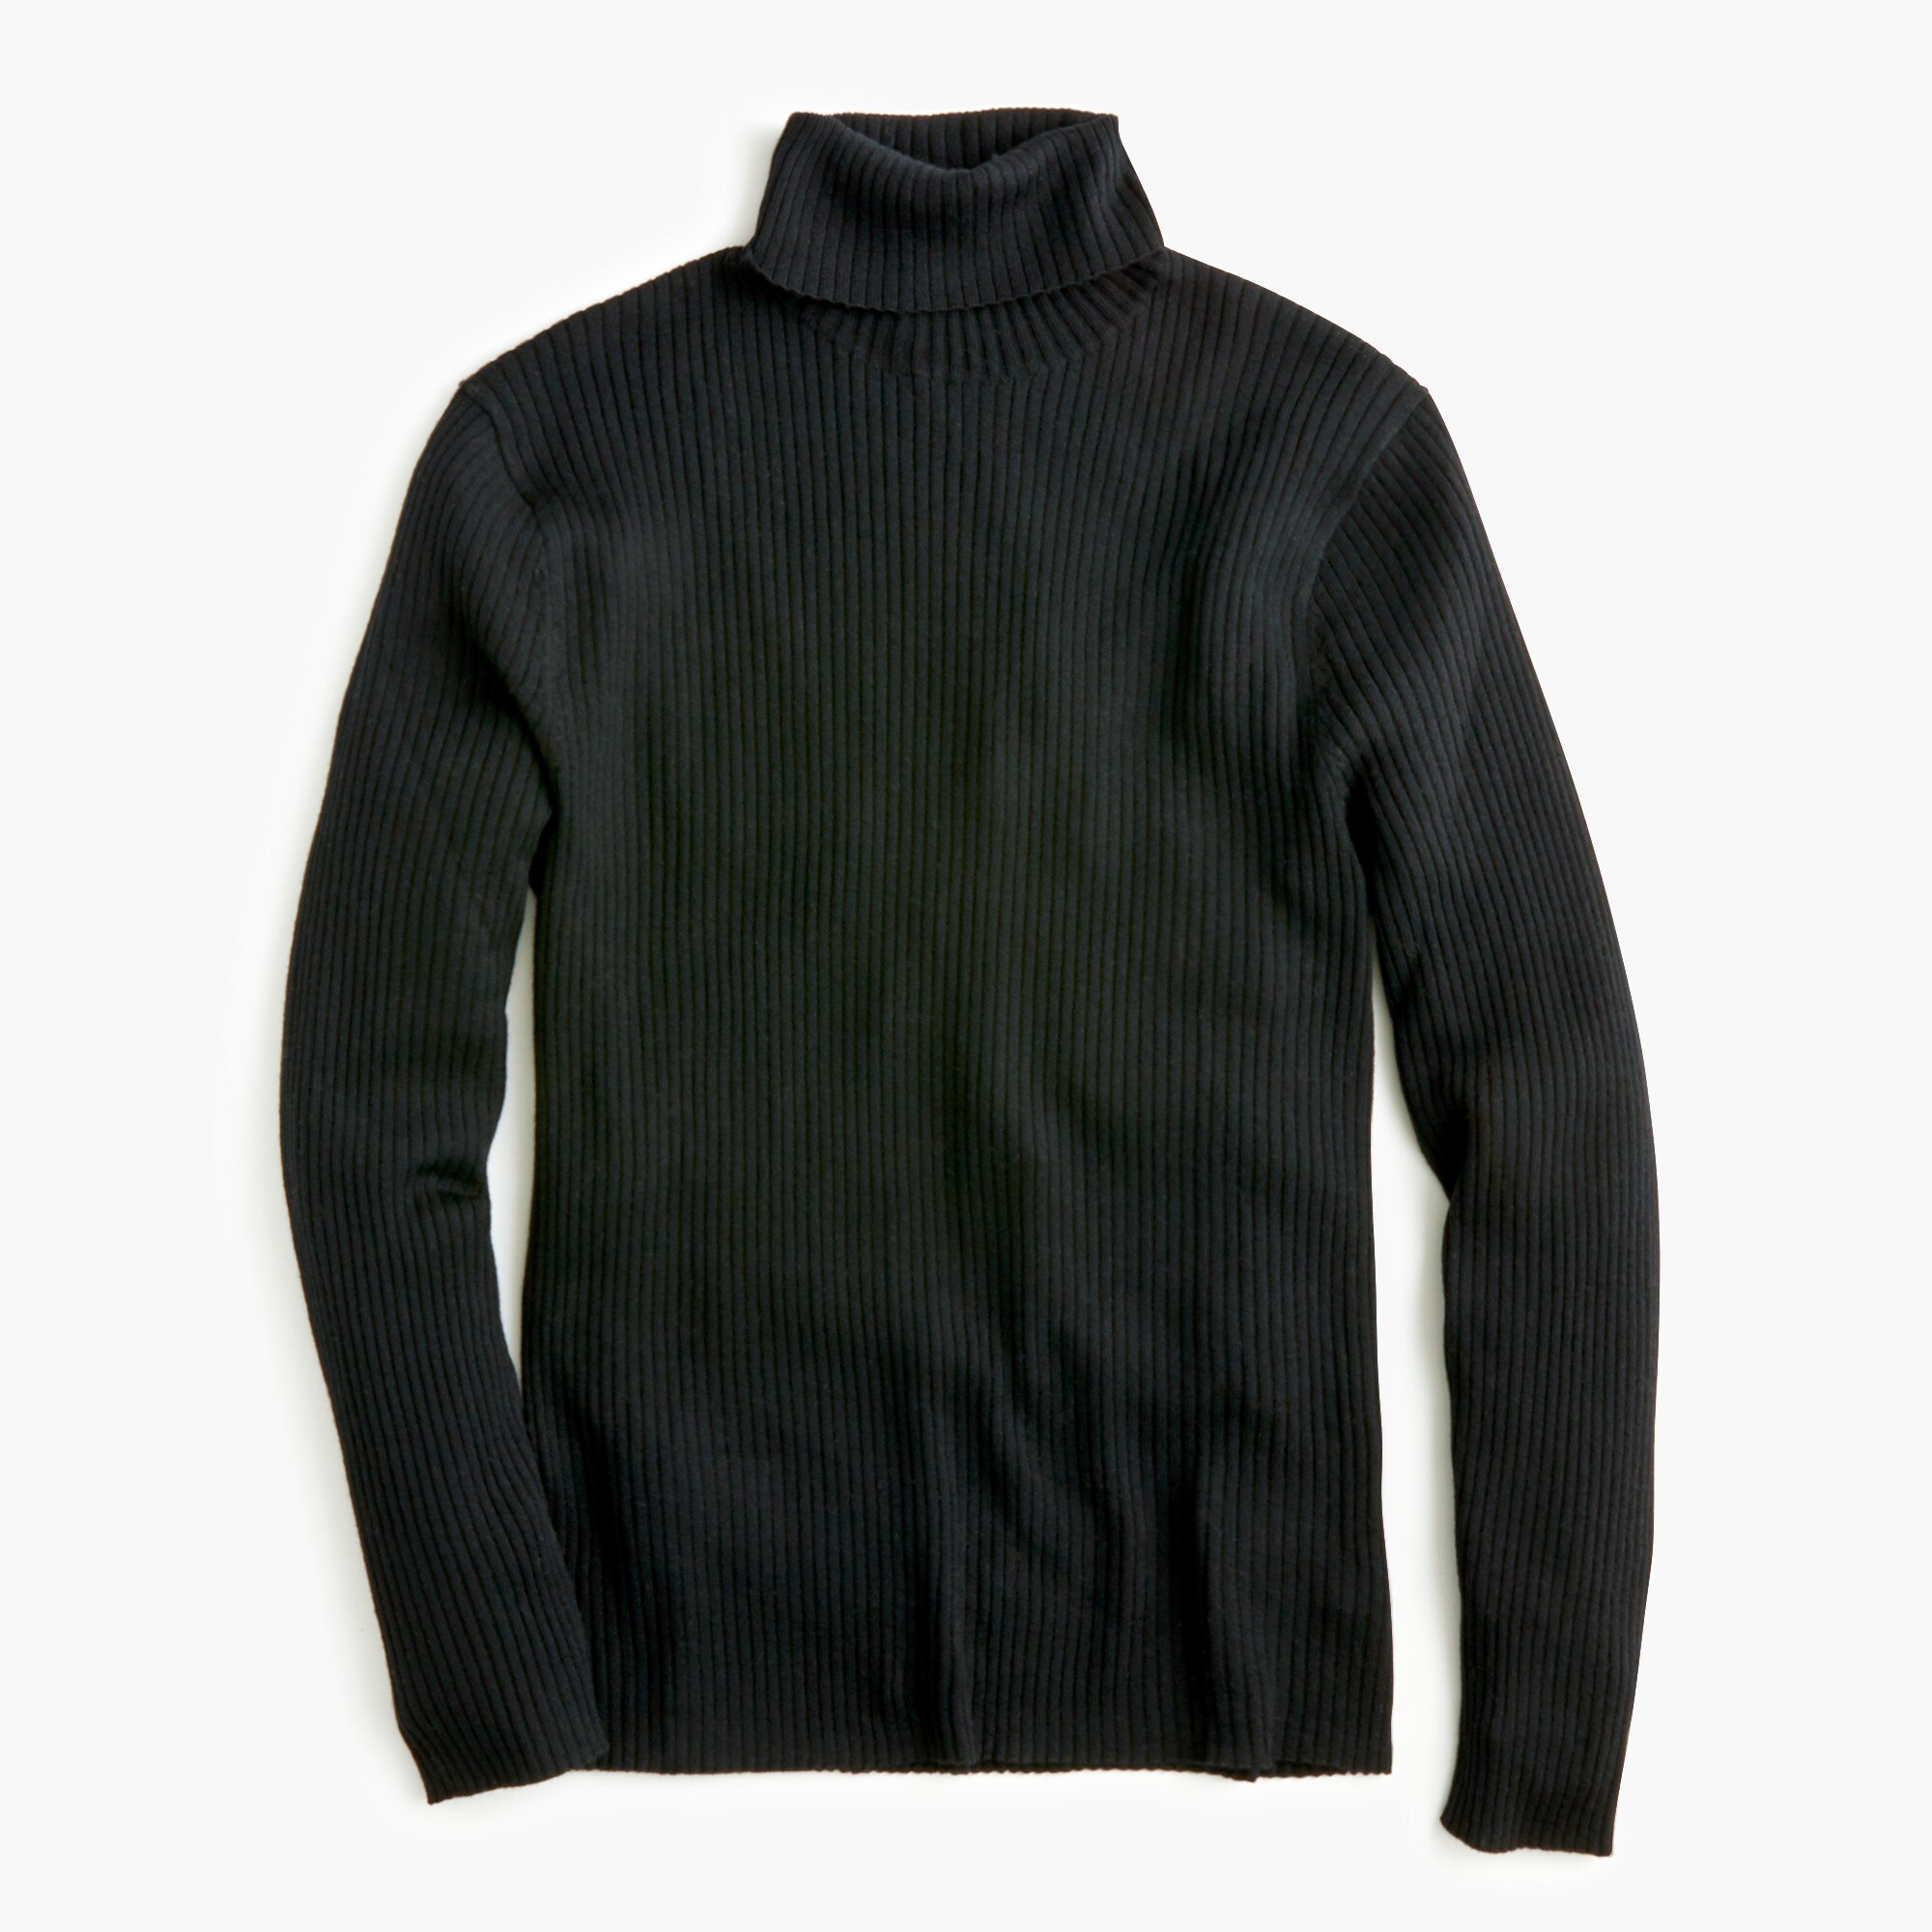 J.Crew: Destination Merino Wool Turtleneck Sweater For Men